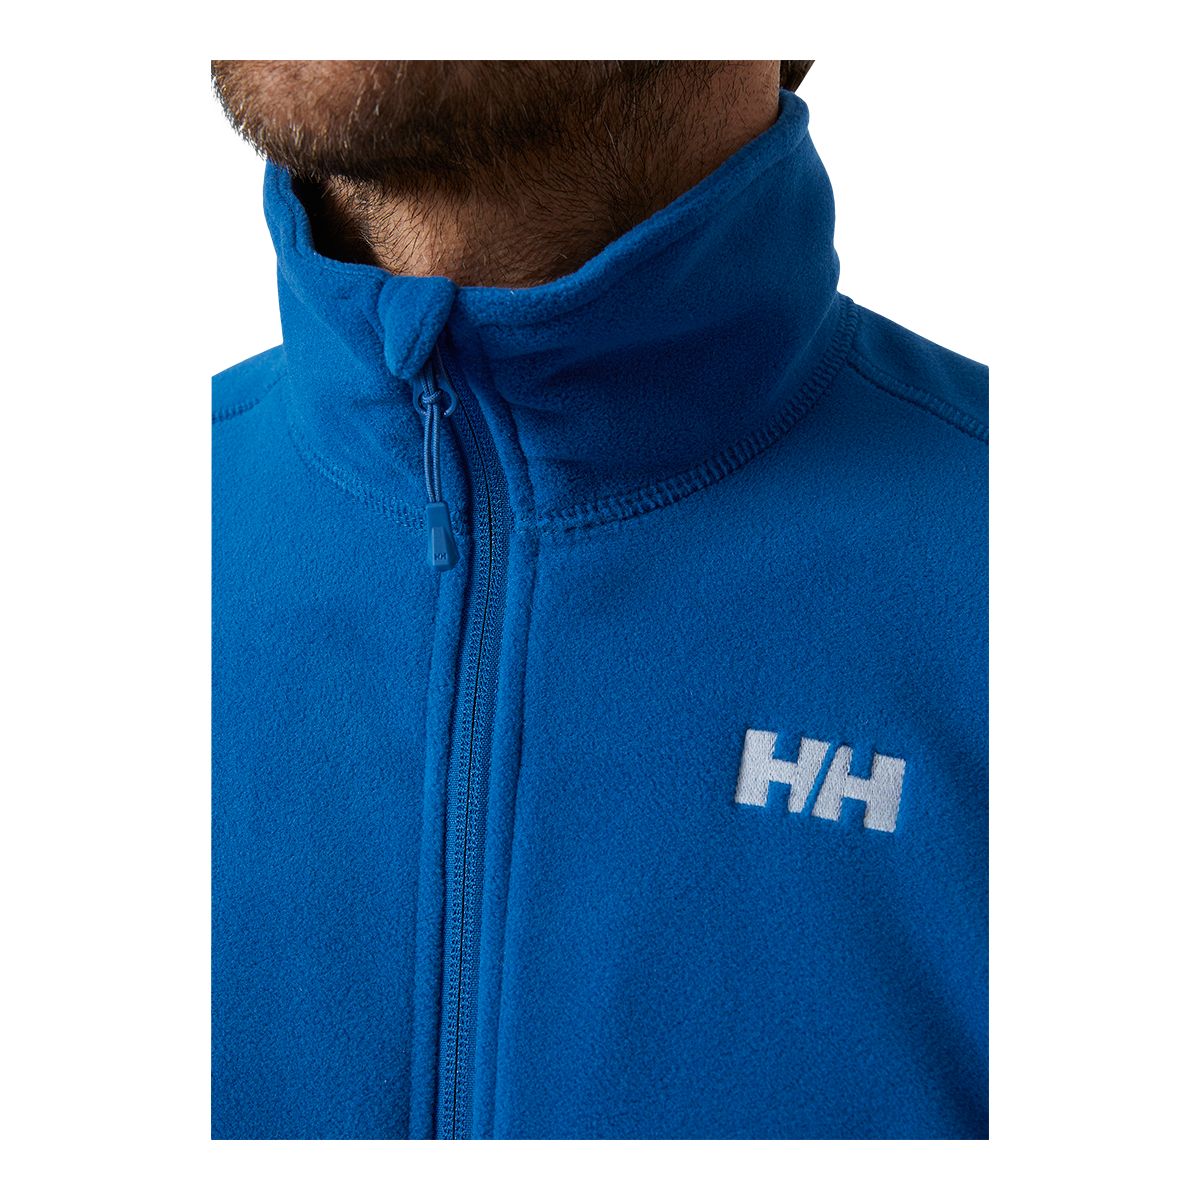  Helly Hansen Men's Daybreaker Fleece Jacket, 598 Navy, Small :  Sports & Outdoors